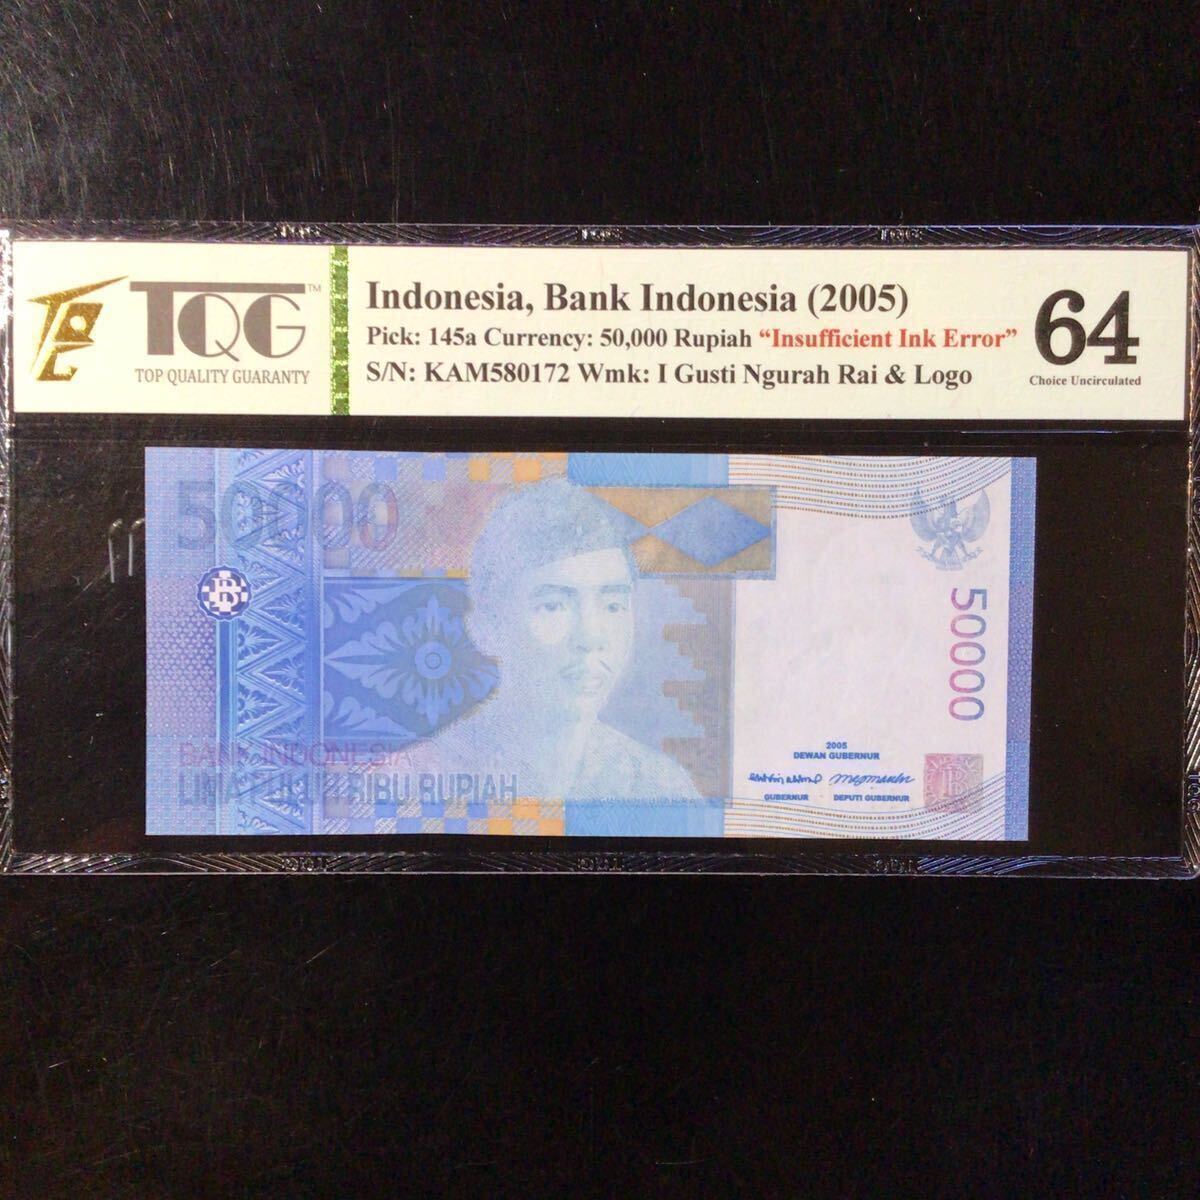 World Banknote Grading INDONESIA《Bank Indonesia》50000 Rupiah【2005】〔“Insufficient Ink Error”〕『TQG Grading Choice Unc 64』_画像1